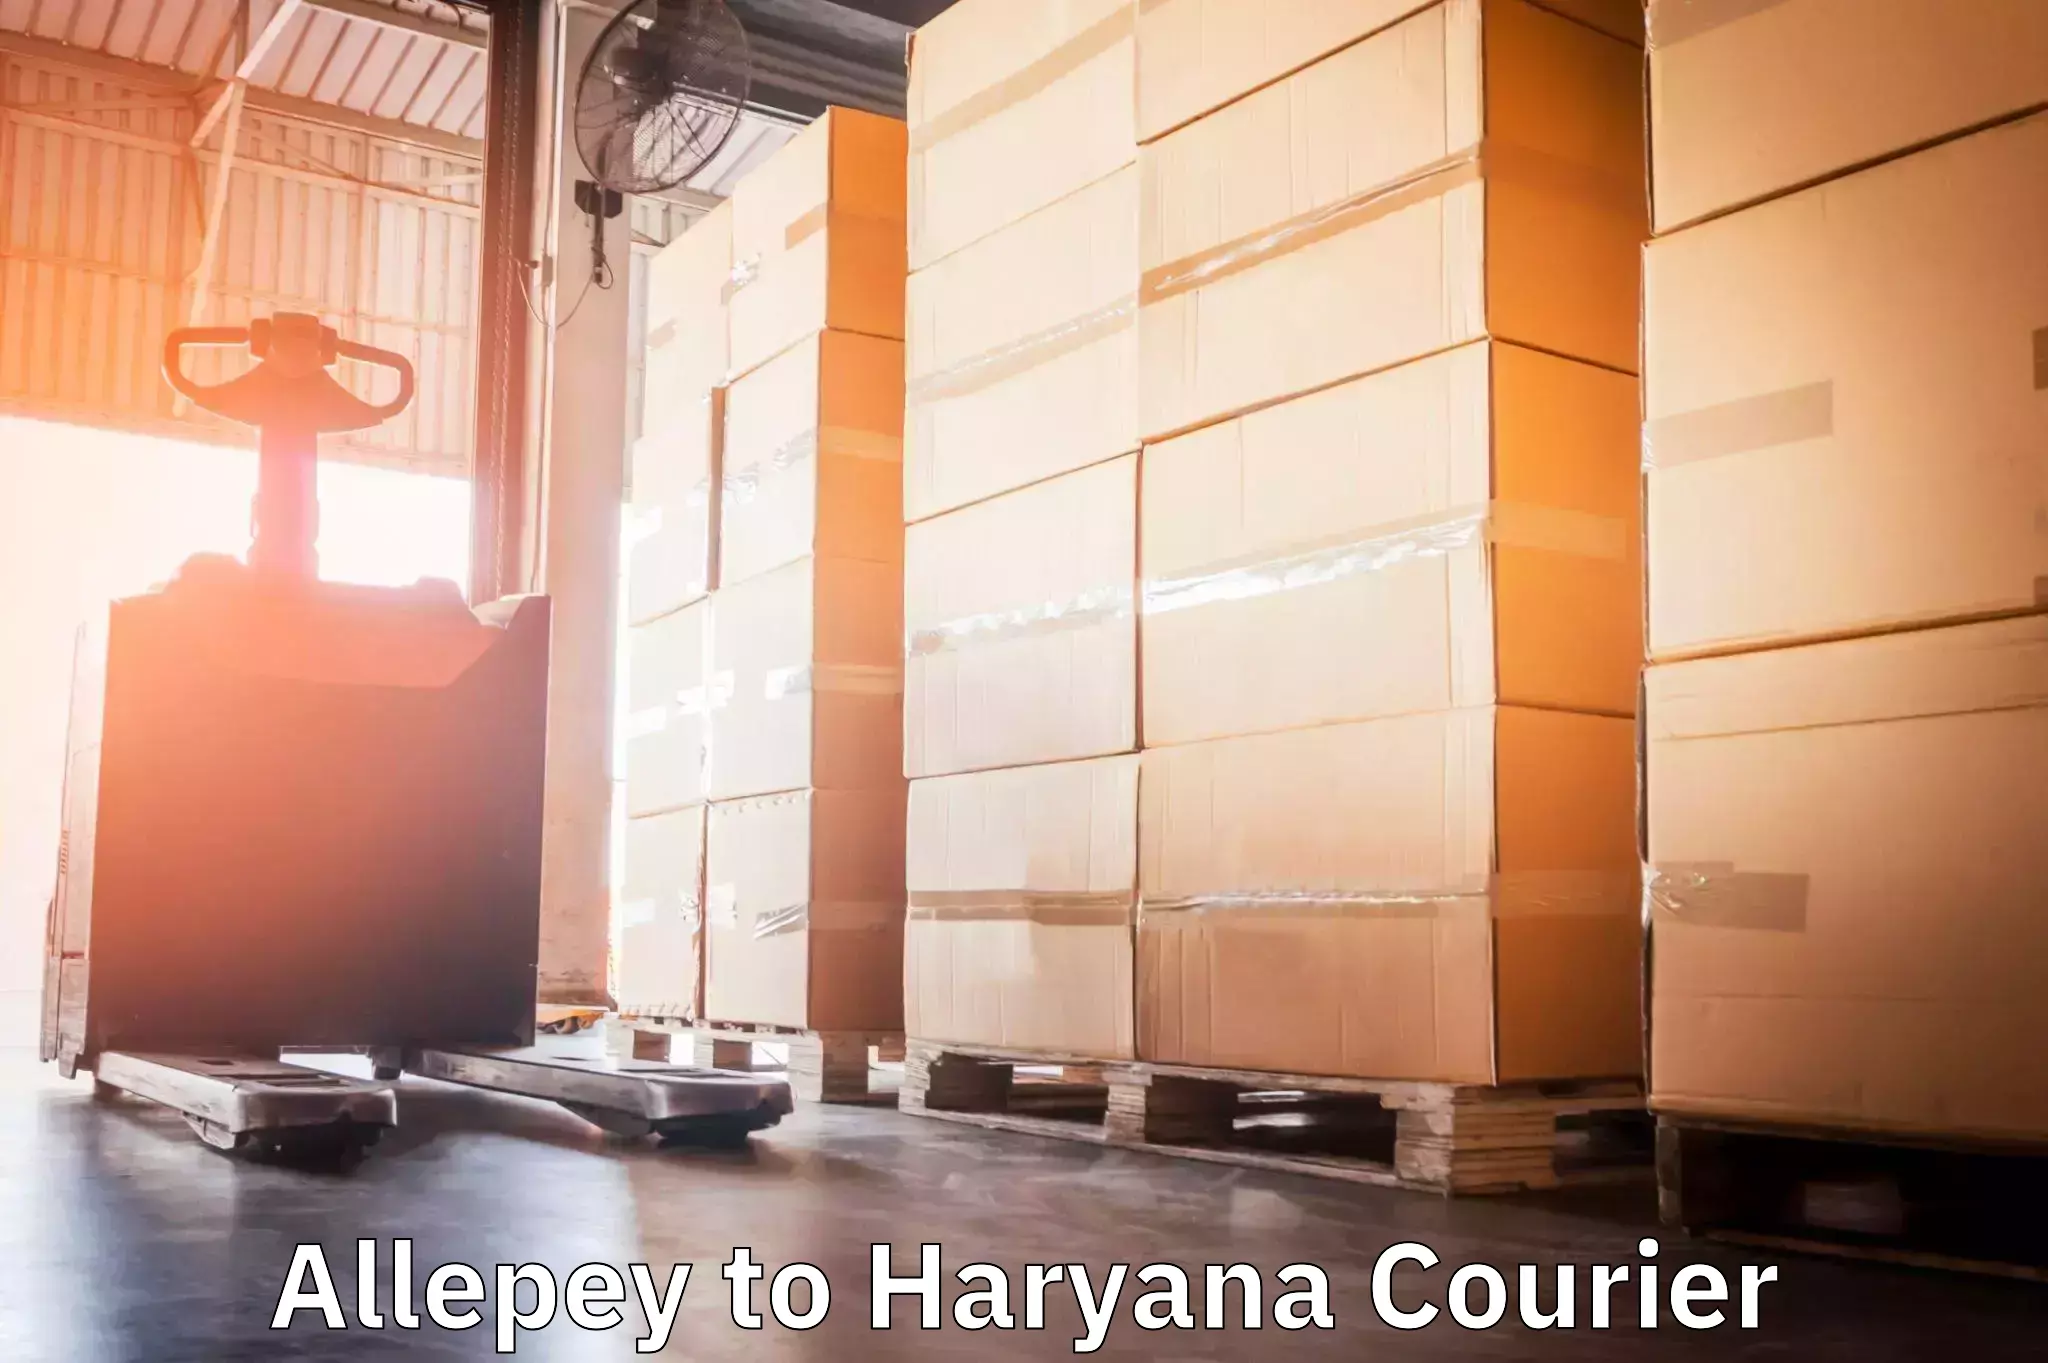 Digital courier platforms Allepey to Haryana